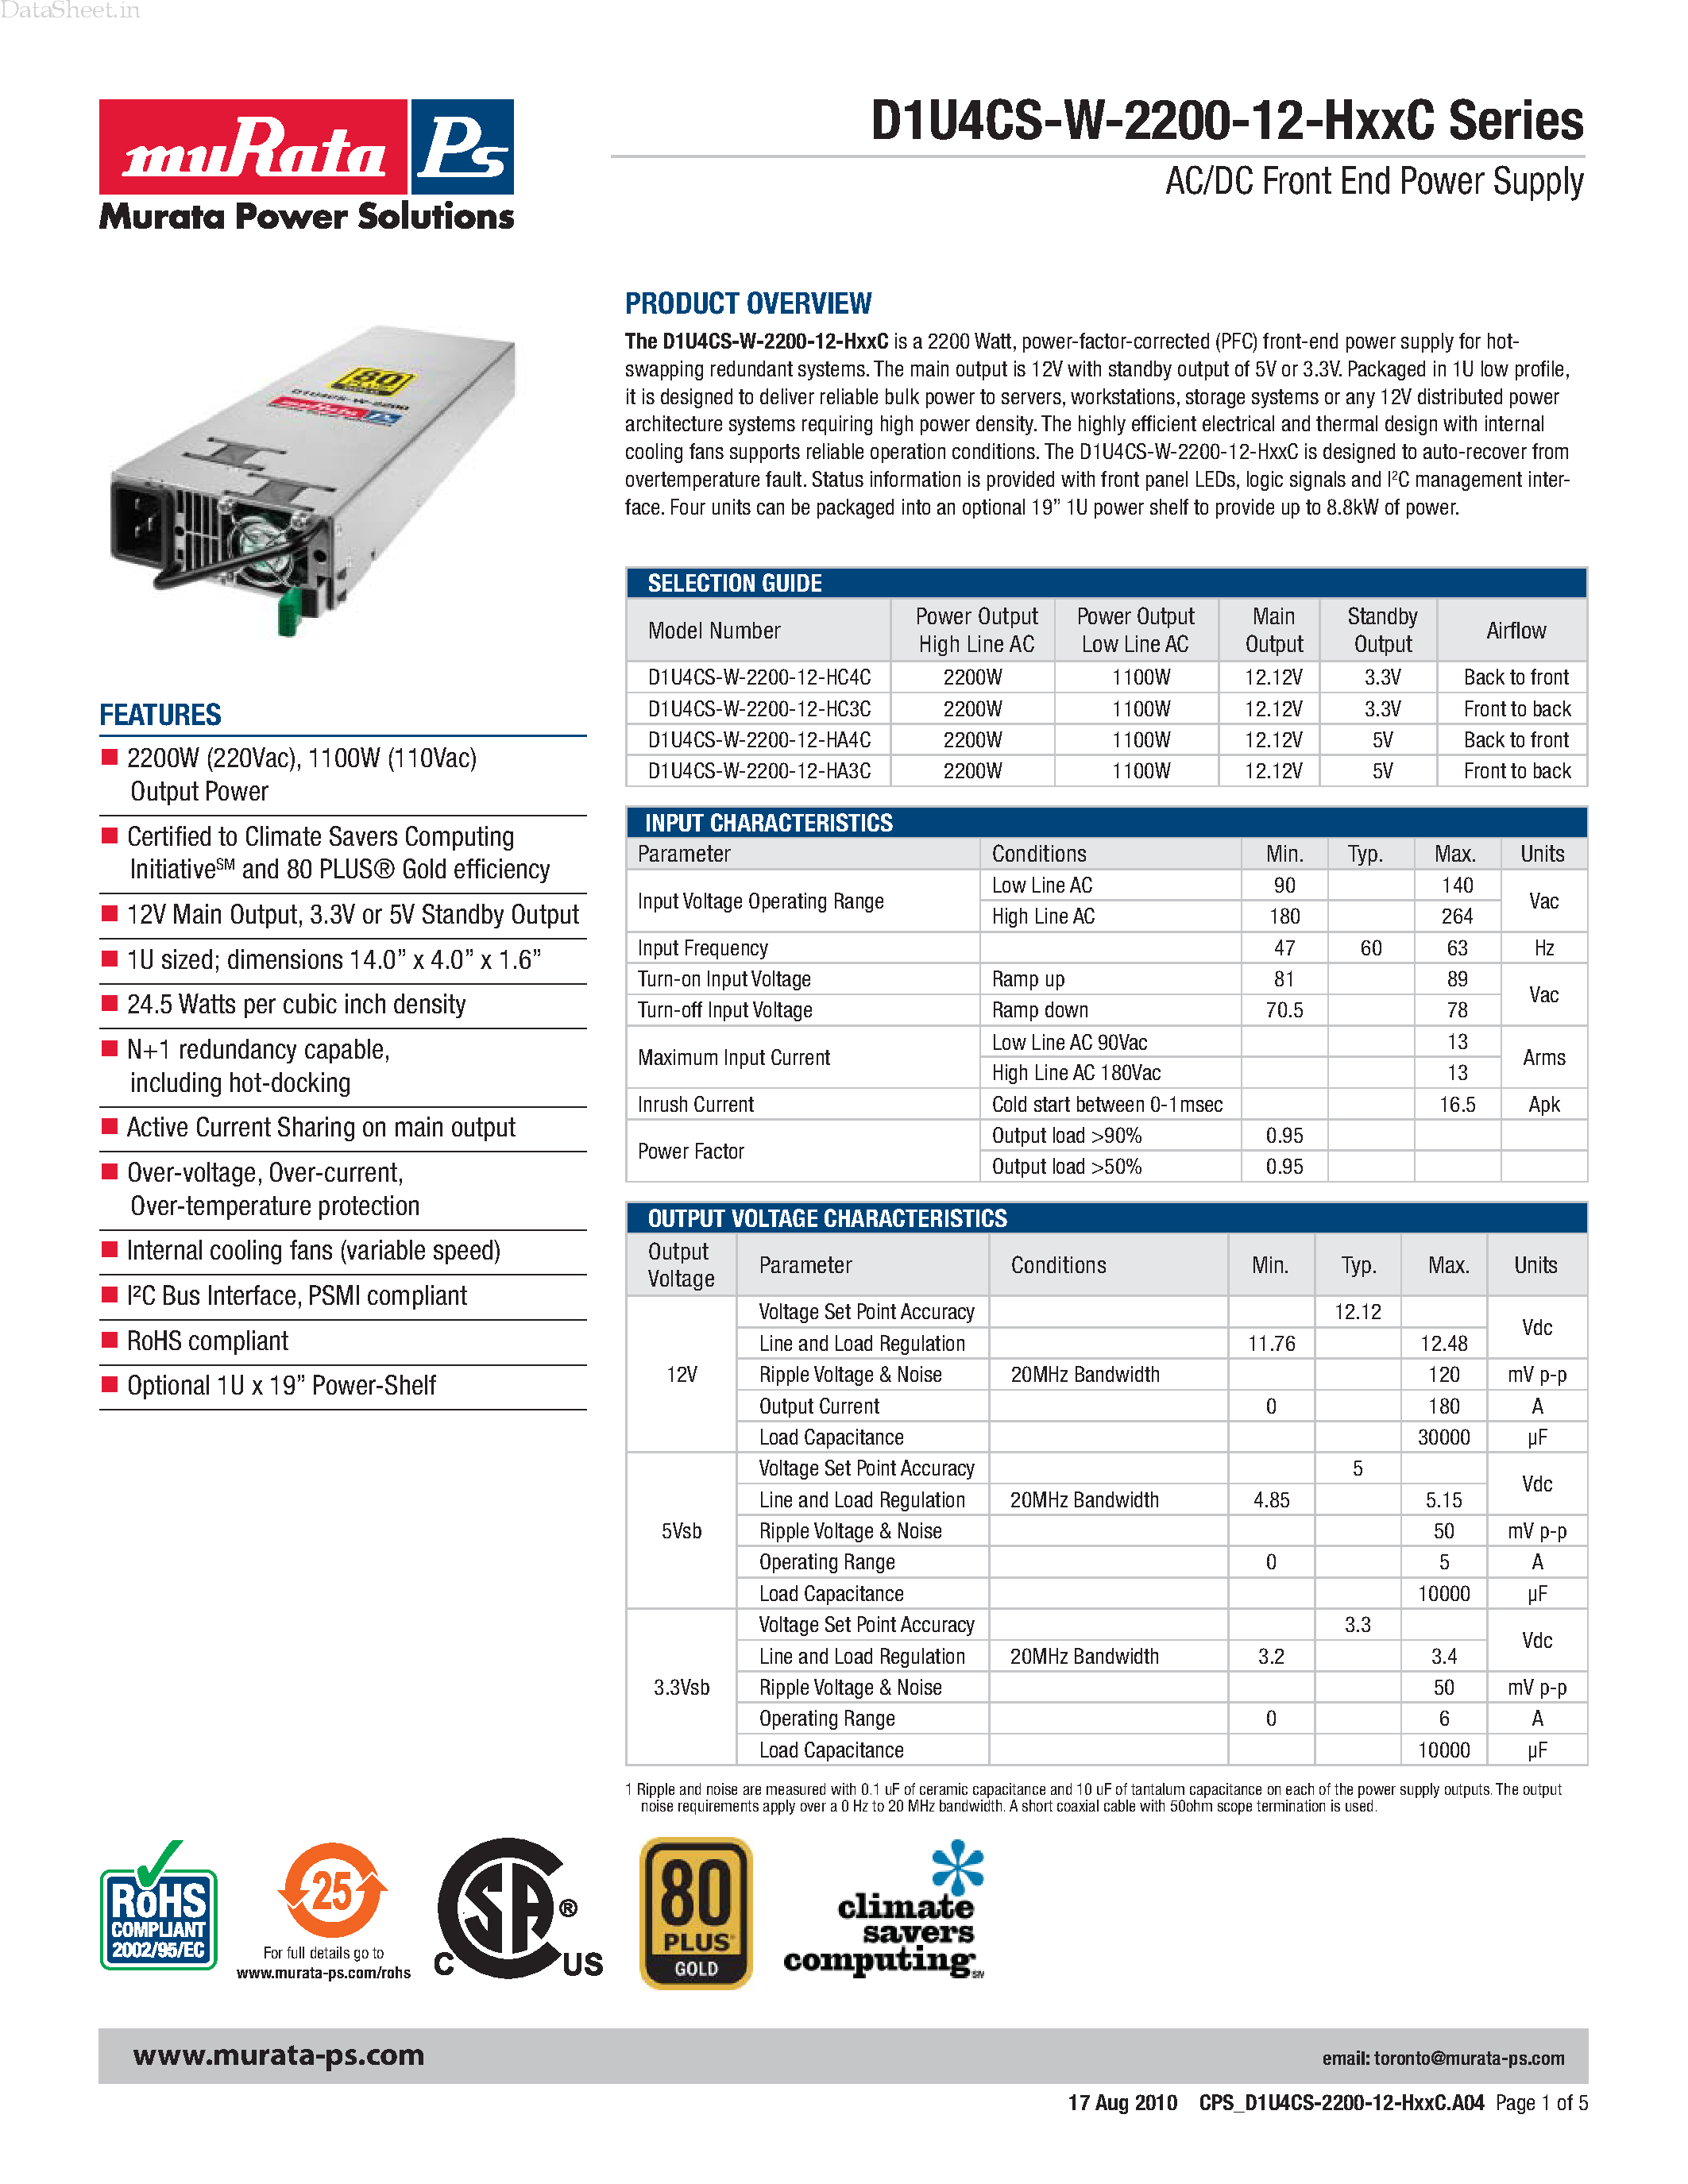 Datasheet D1U4CS-W-2200-12-HXXC - AC/DC Front End Power Supply page 1